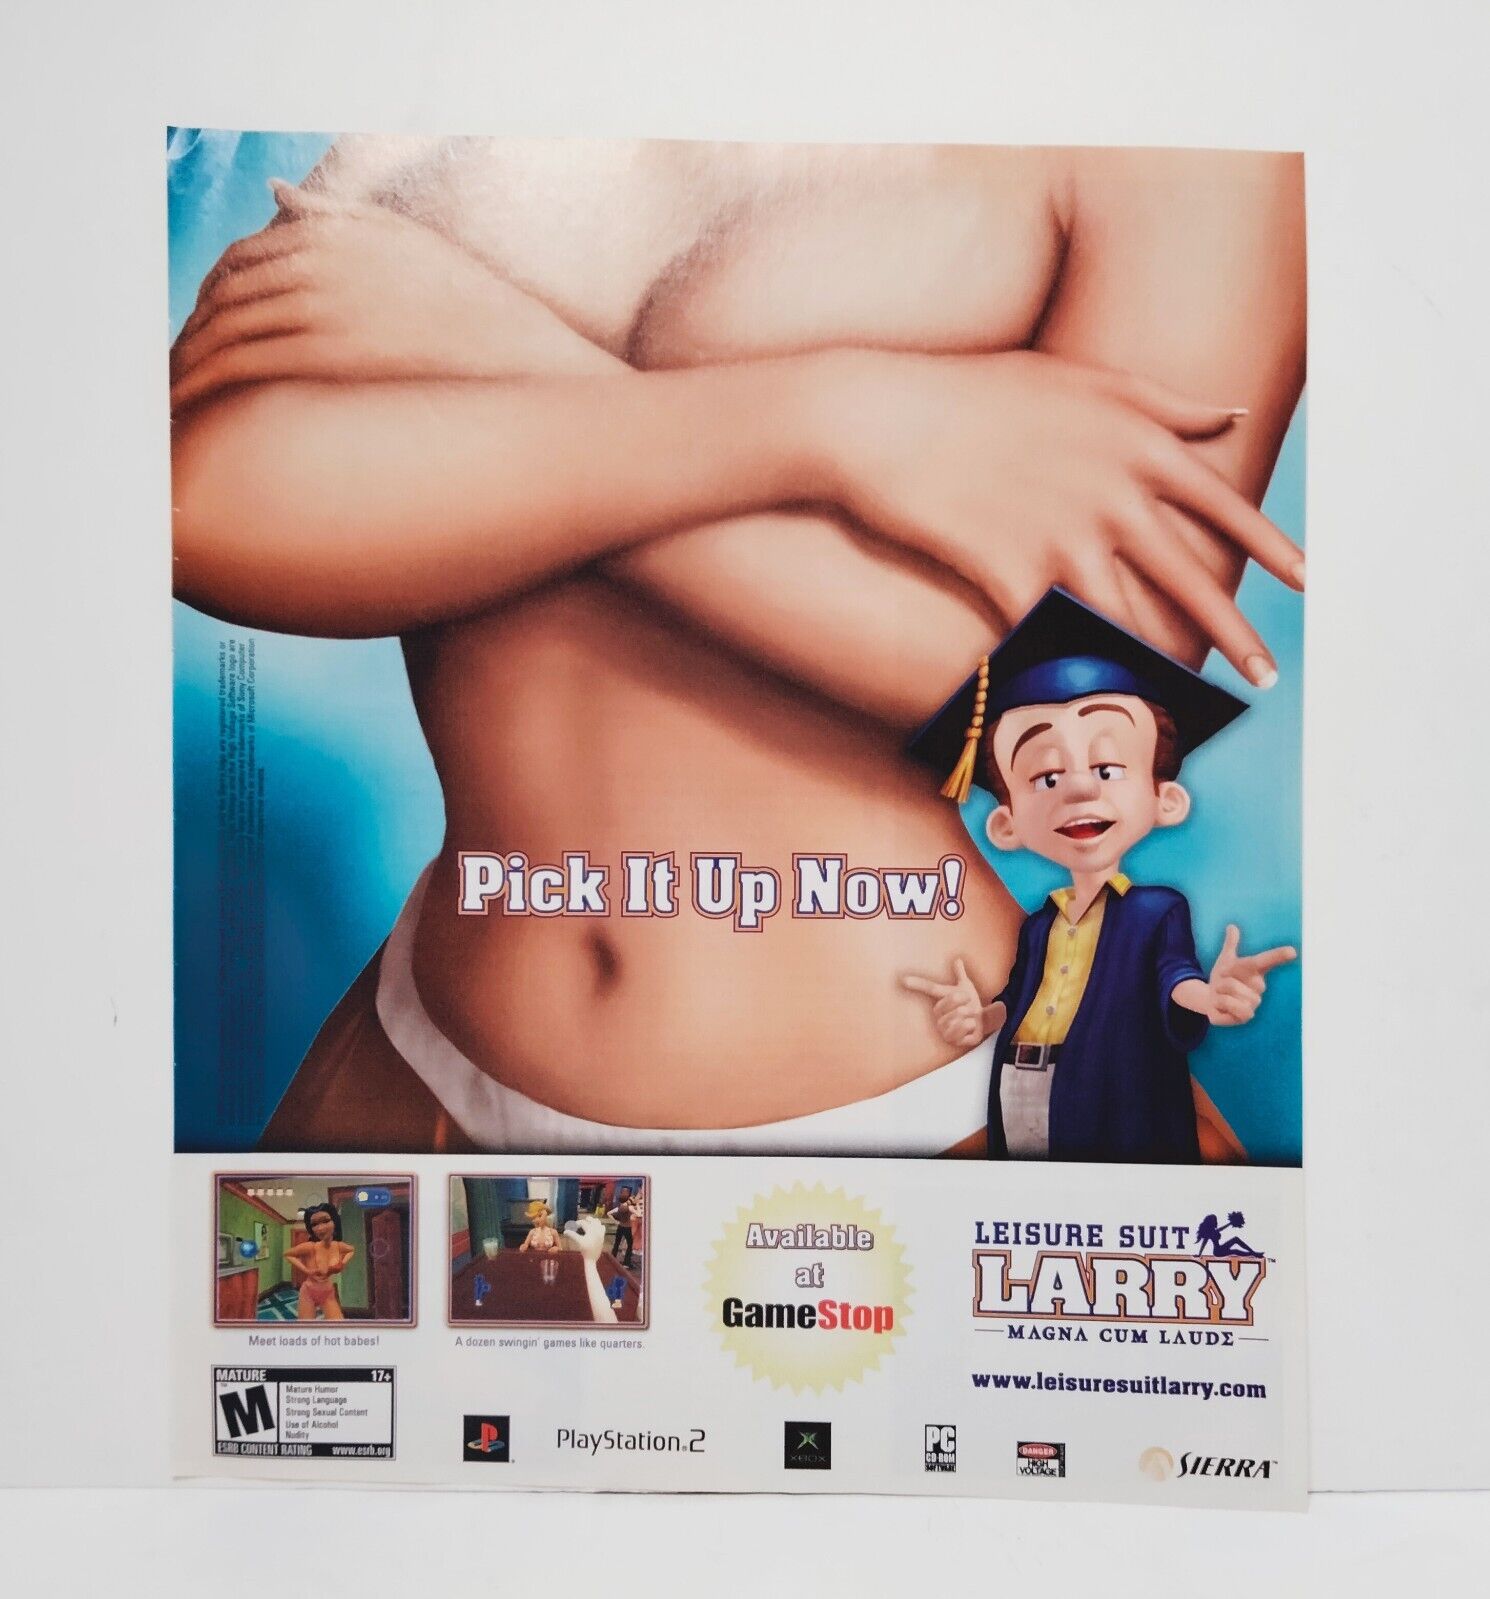 Leisure Suit Larry Magna Cum Laude Print Ad PS2 Xbox Vintage Magazine Poster 